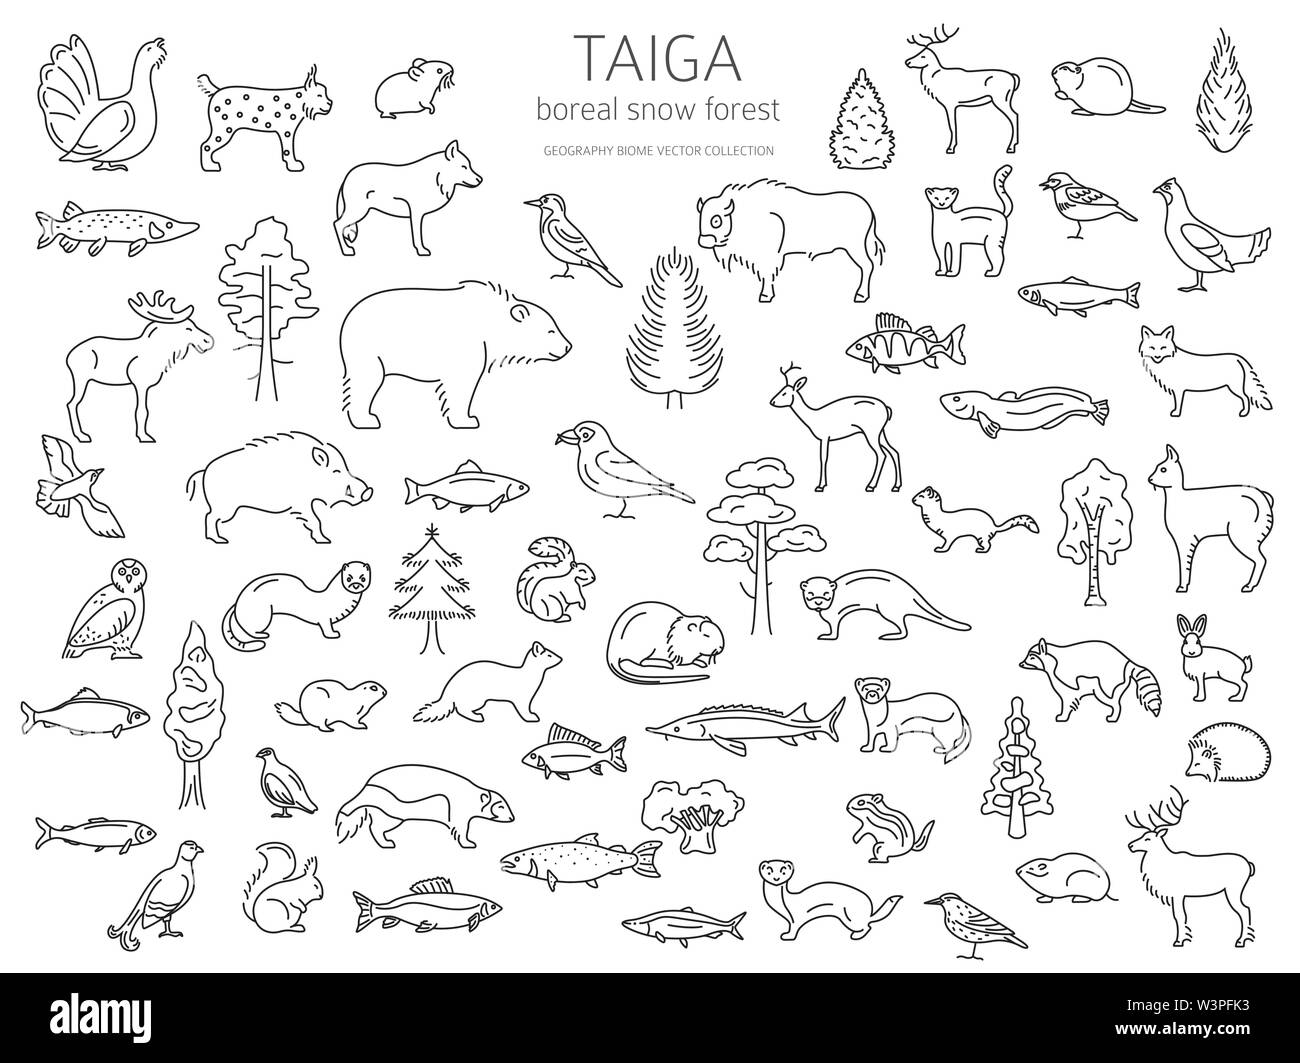 Plants & Animals in the Taiga Biome